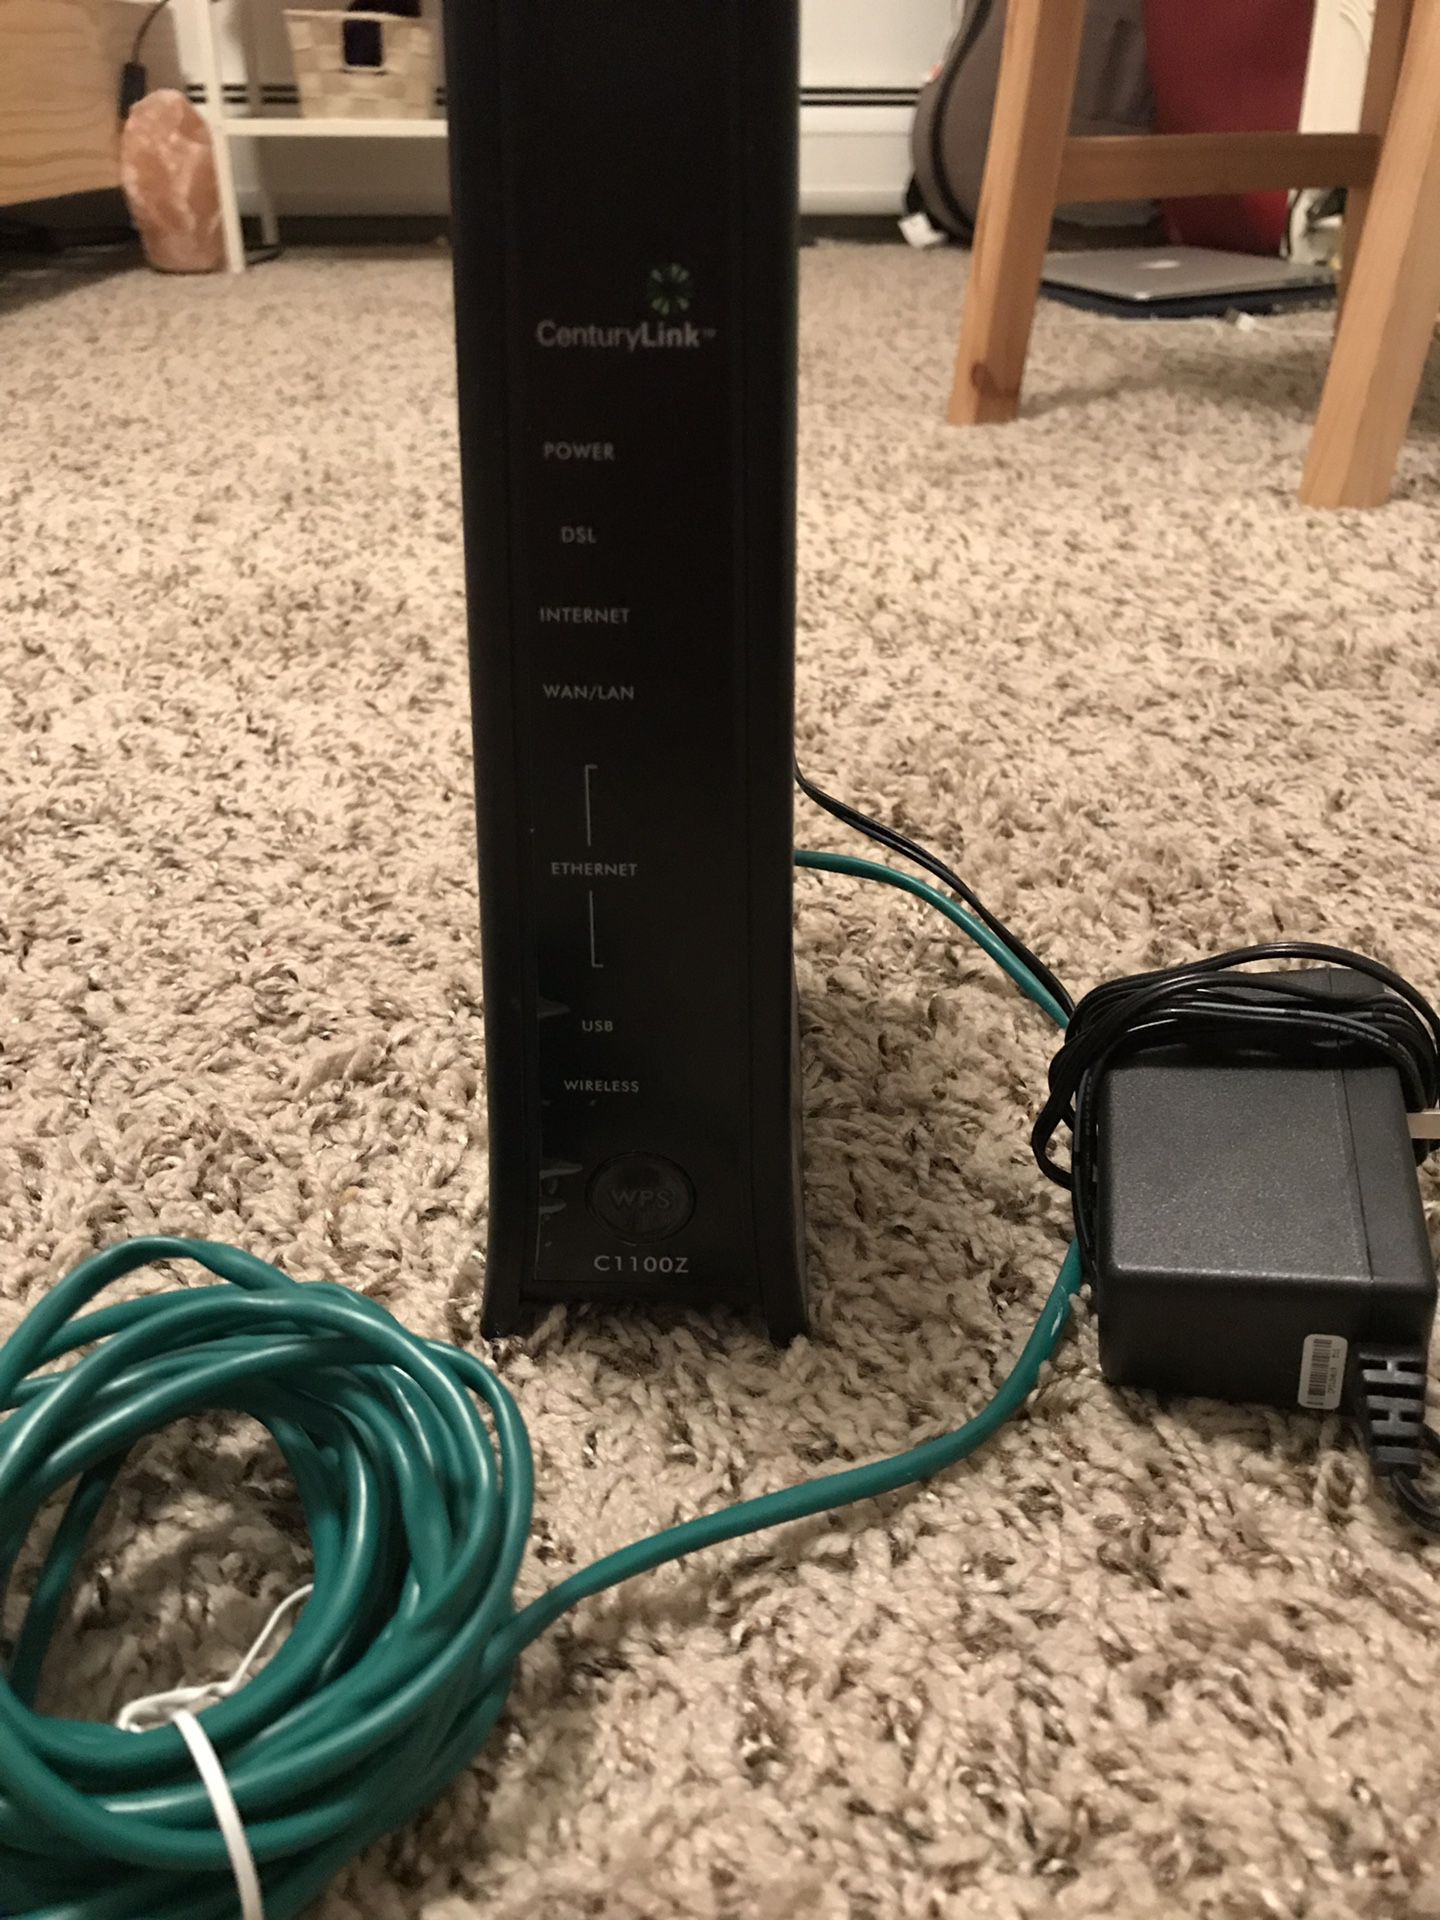 Century link Internet router/ modem